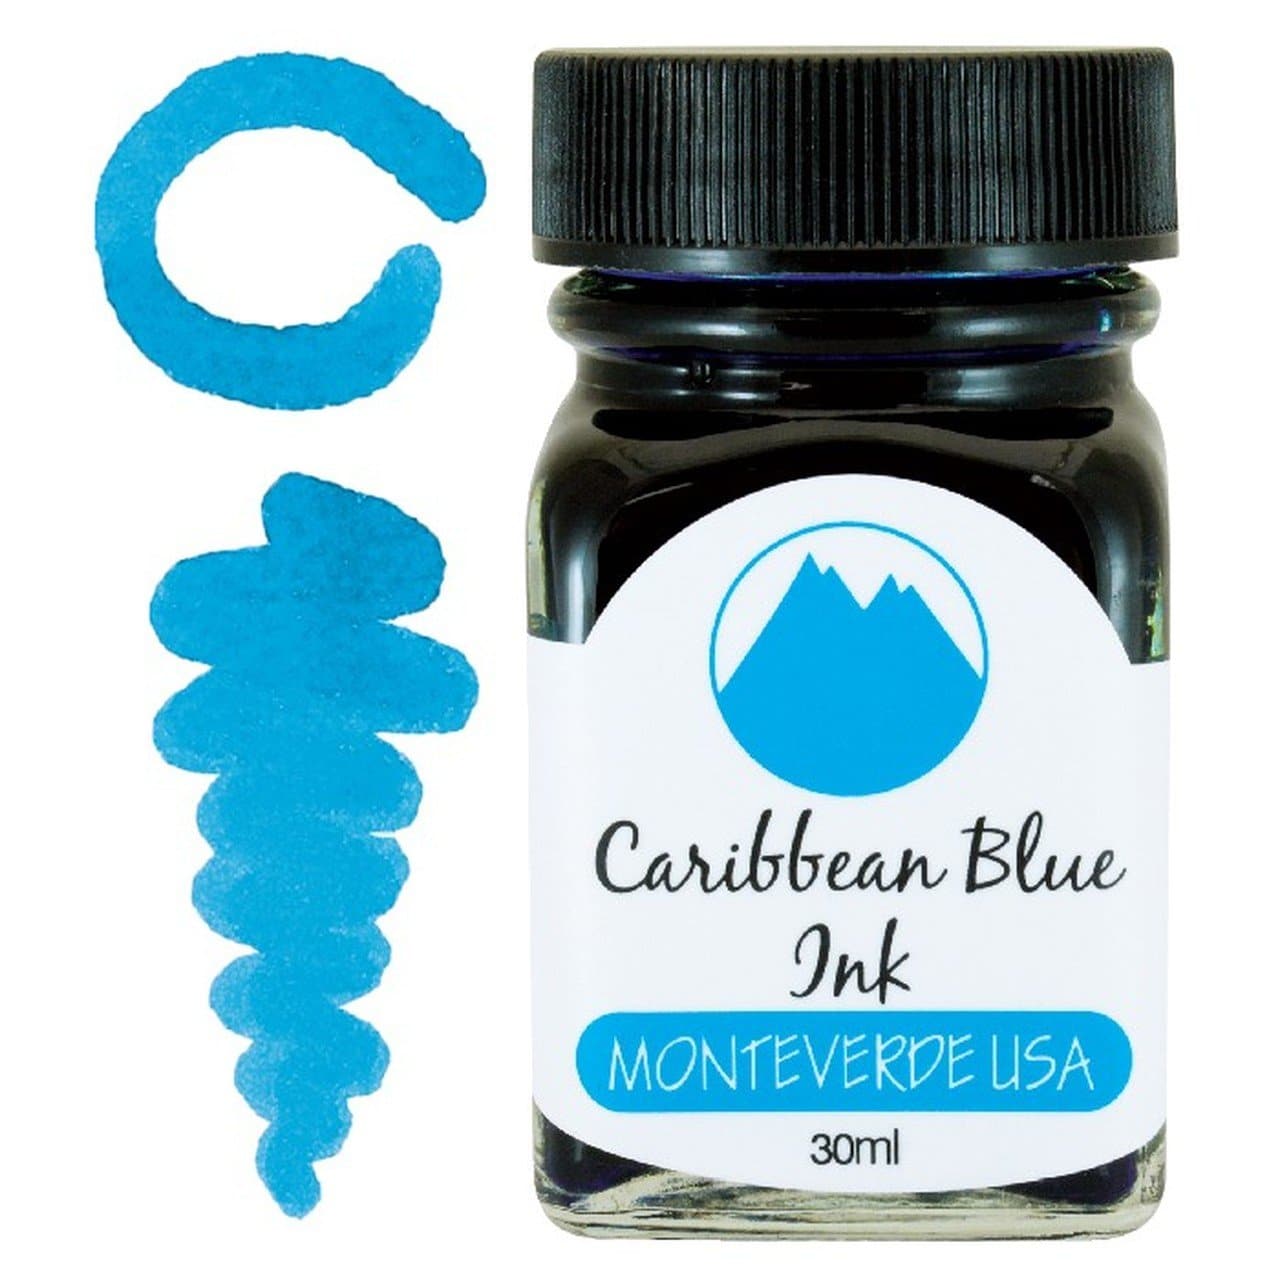 Monterverde Ink Core 30ml - Caribbean Blue - Blesket Canada